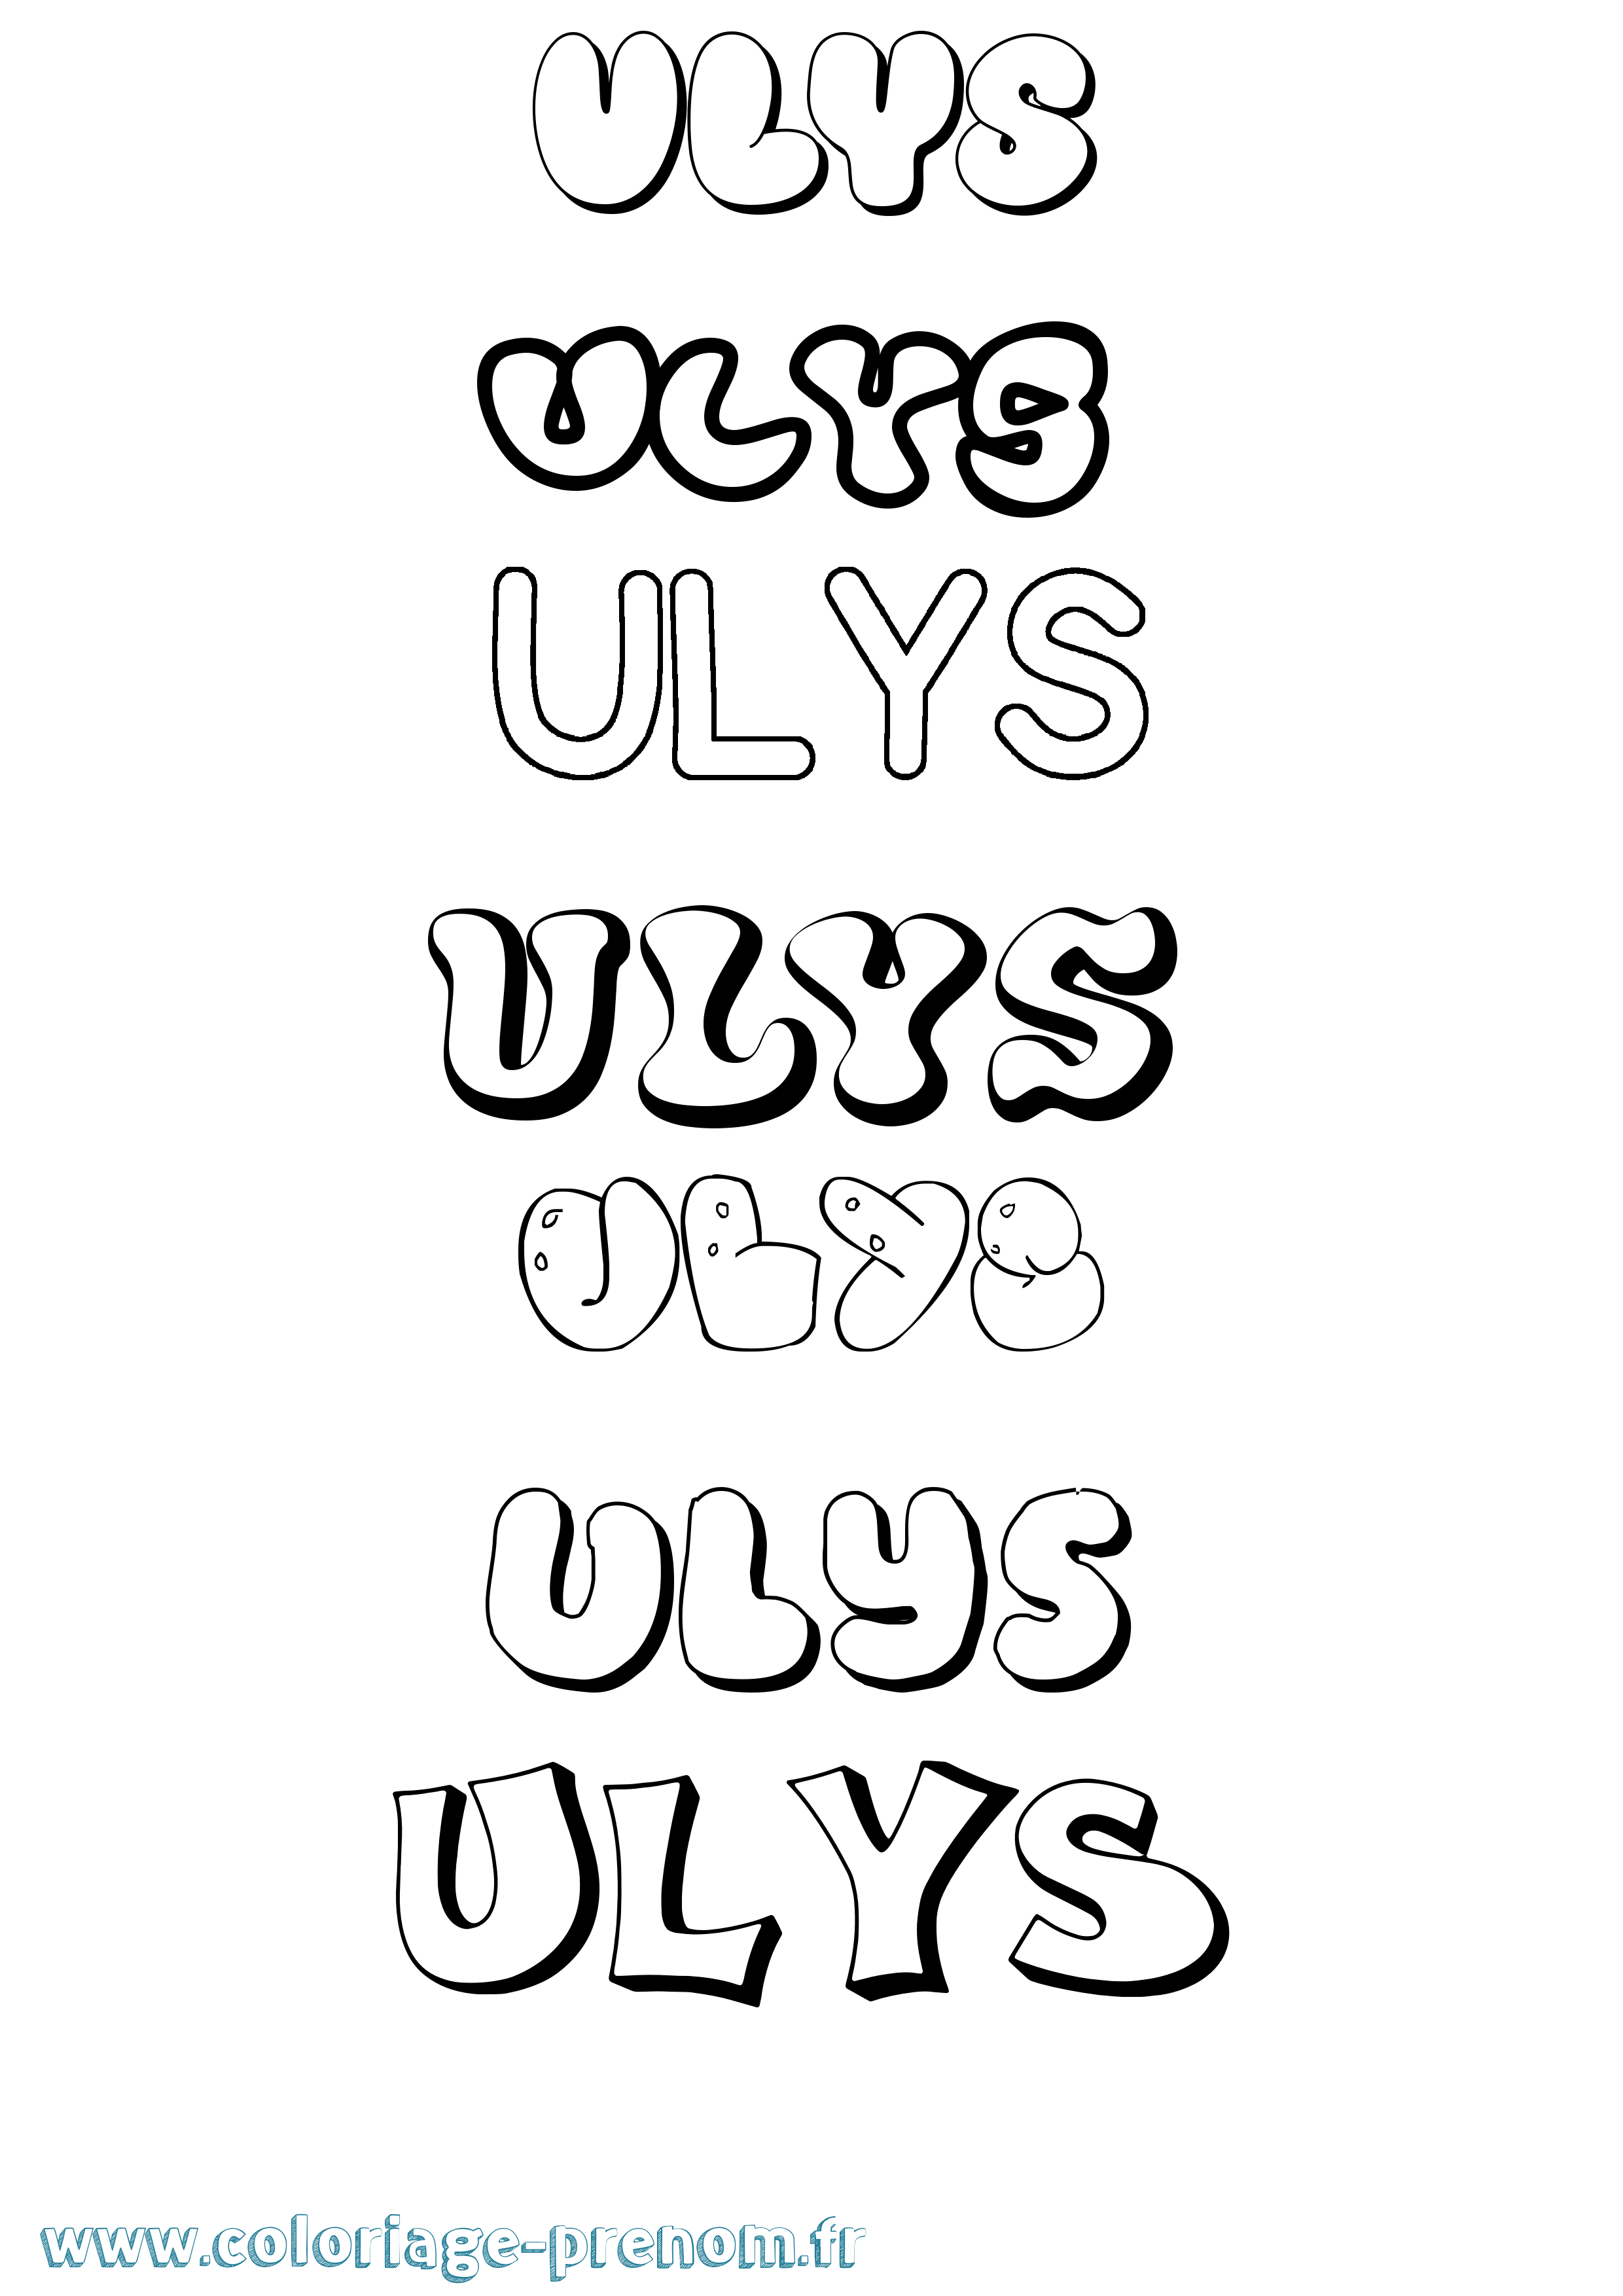 Coloriage prénom Ulys Bubble